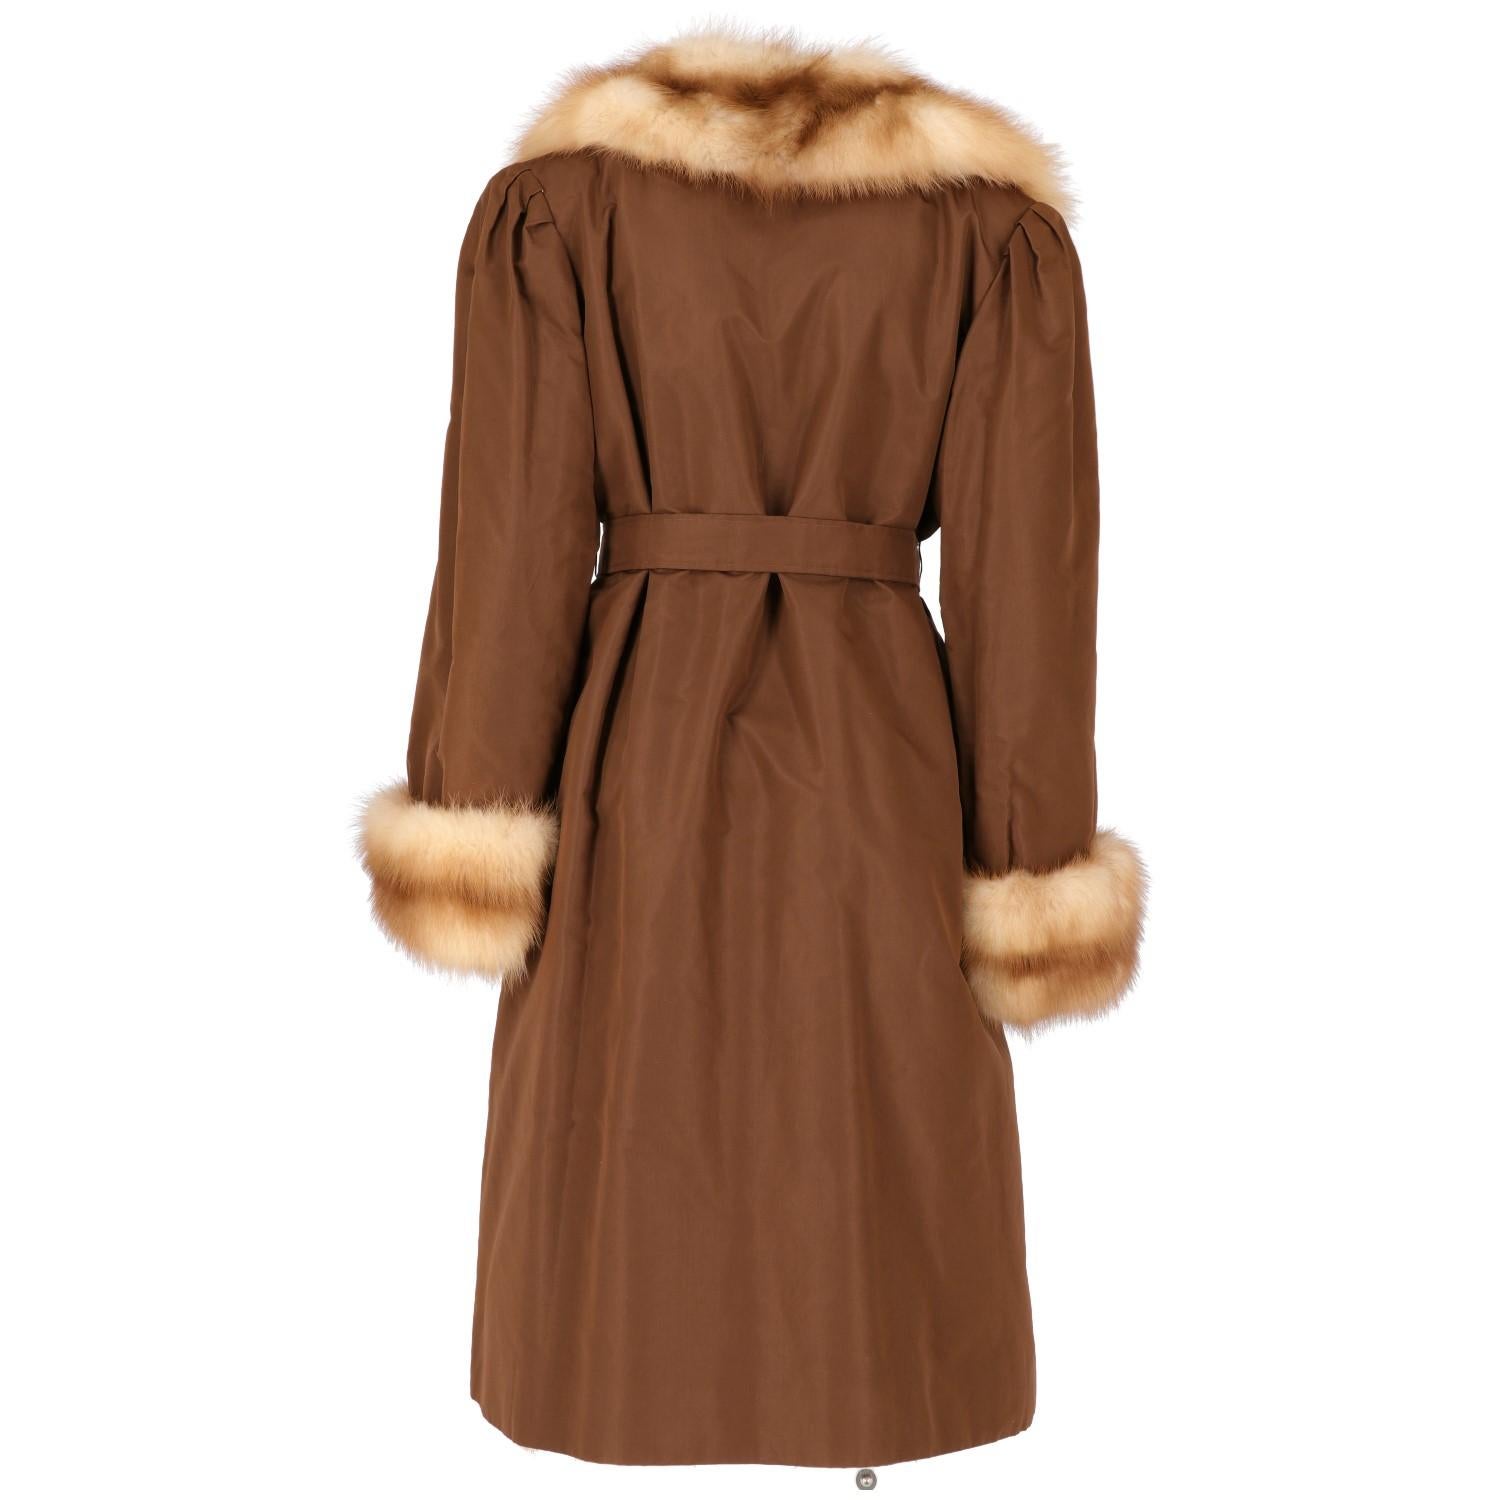 1970s fur coat